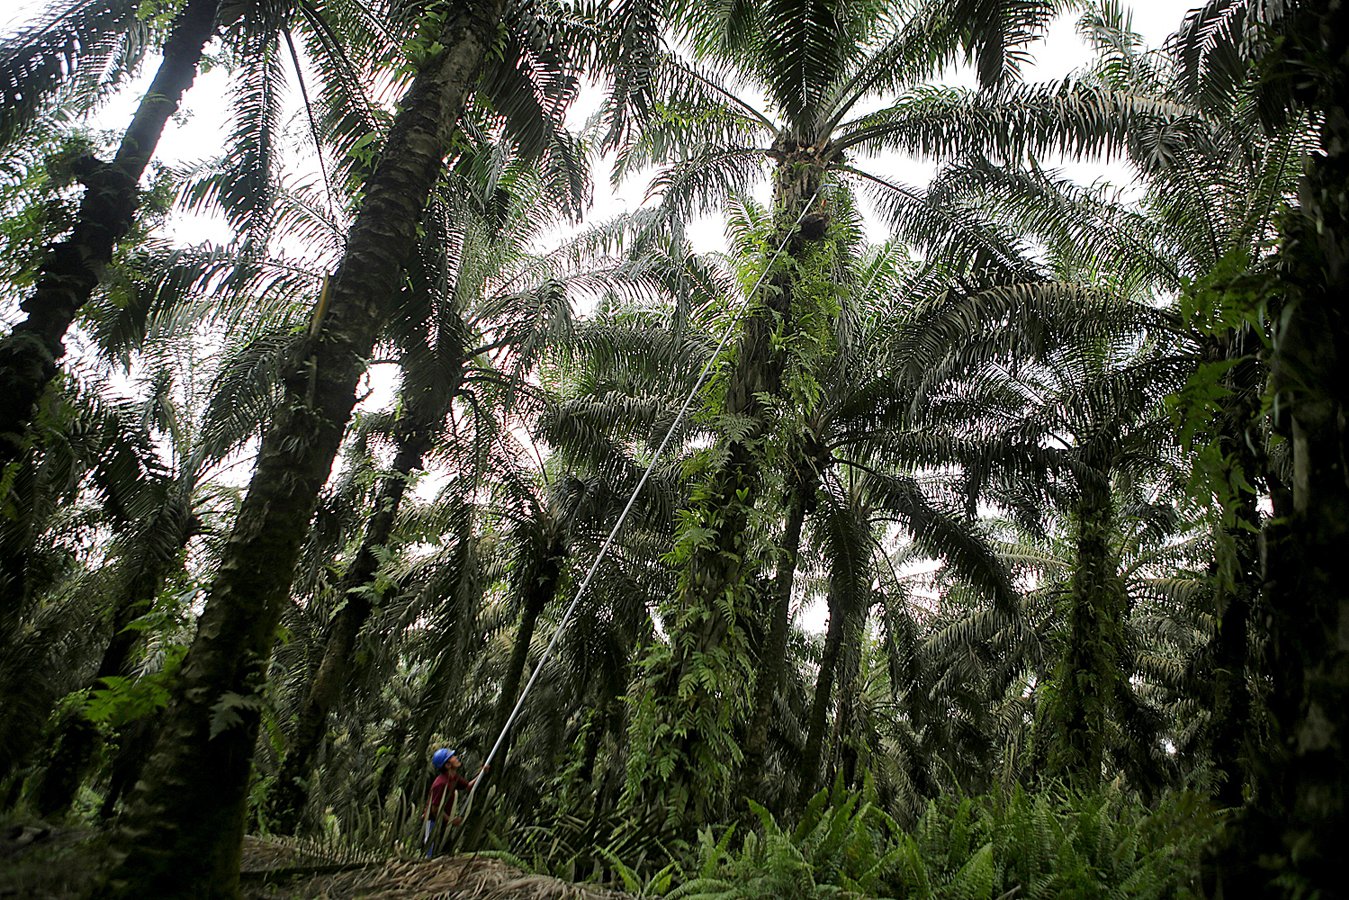 Petani melakukan panen buah kelapa sawit di salah satu perkebunan di Riau.